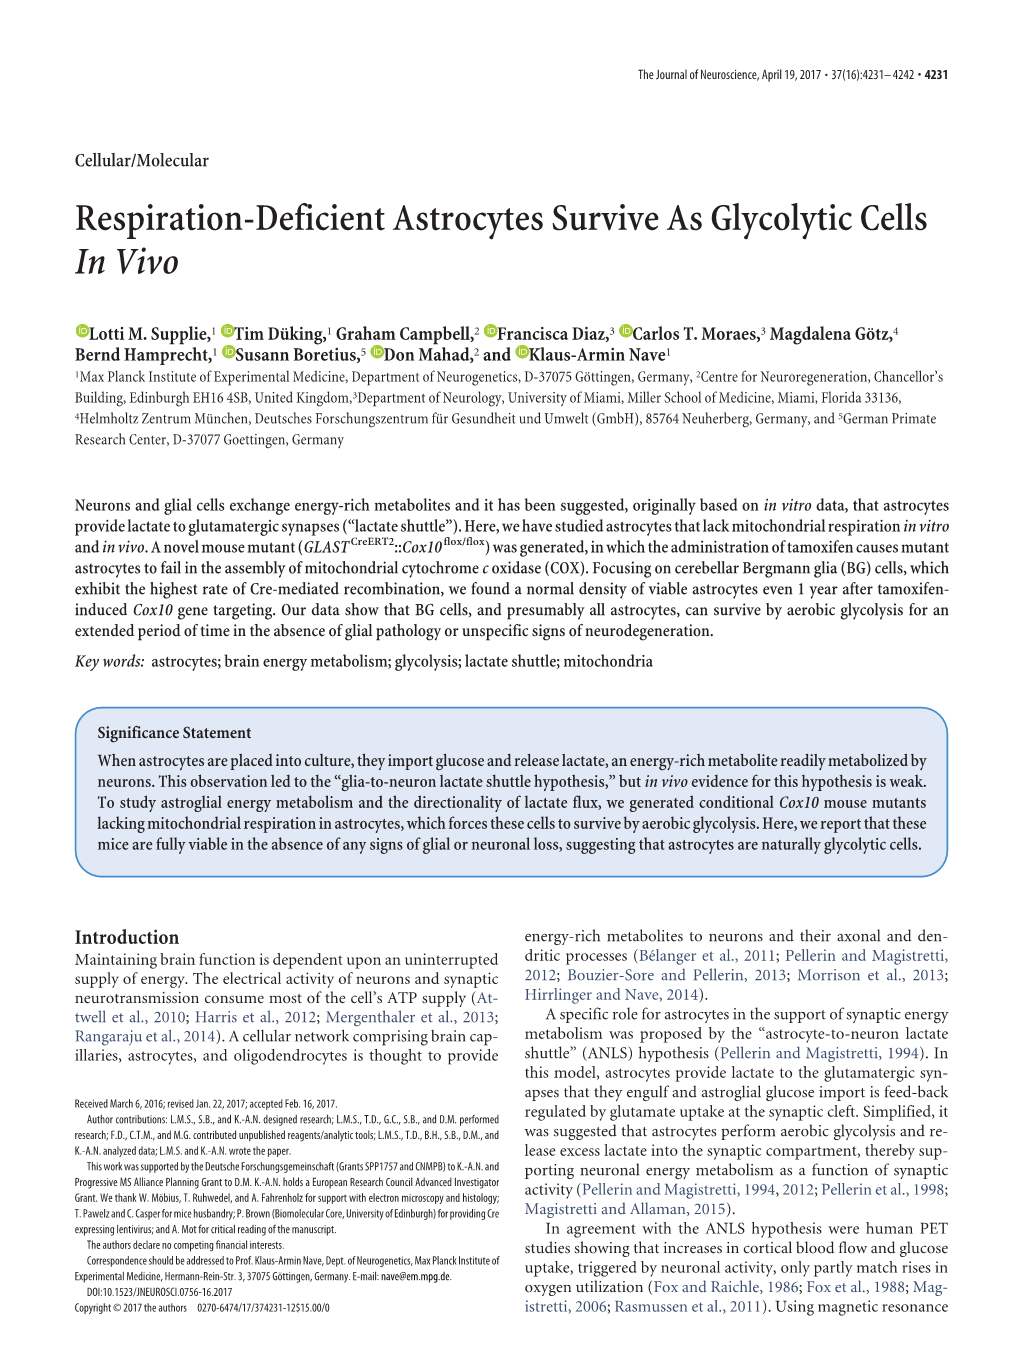 Respiration-Deficient Astrocytes Survive As Glycolytic Cells in Vivo